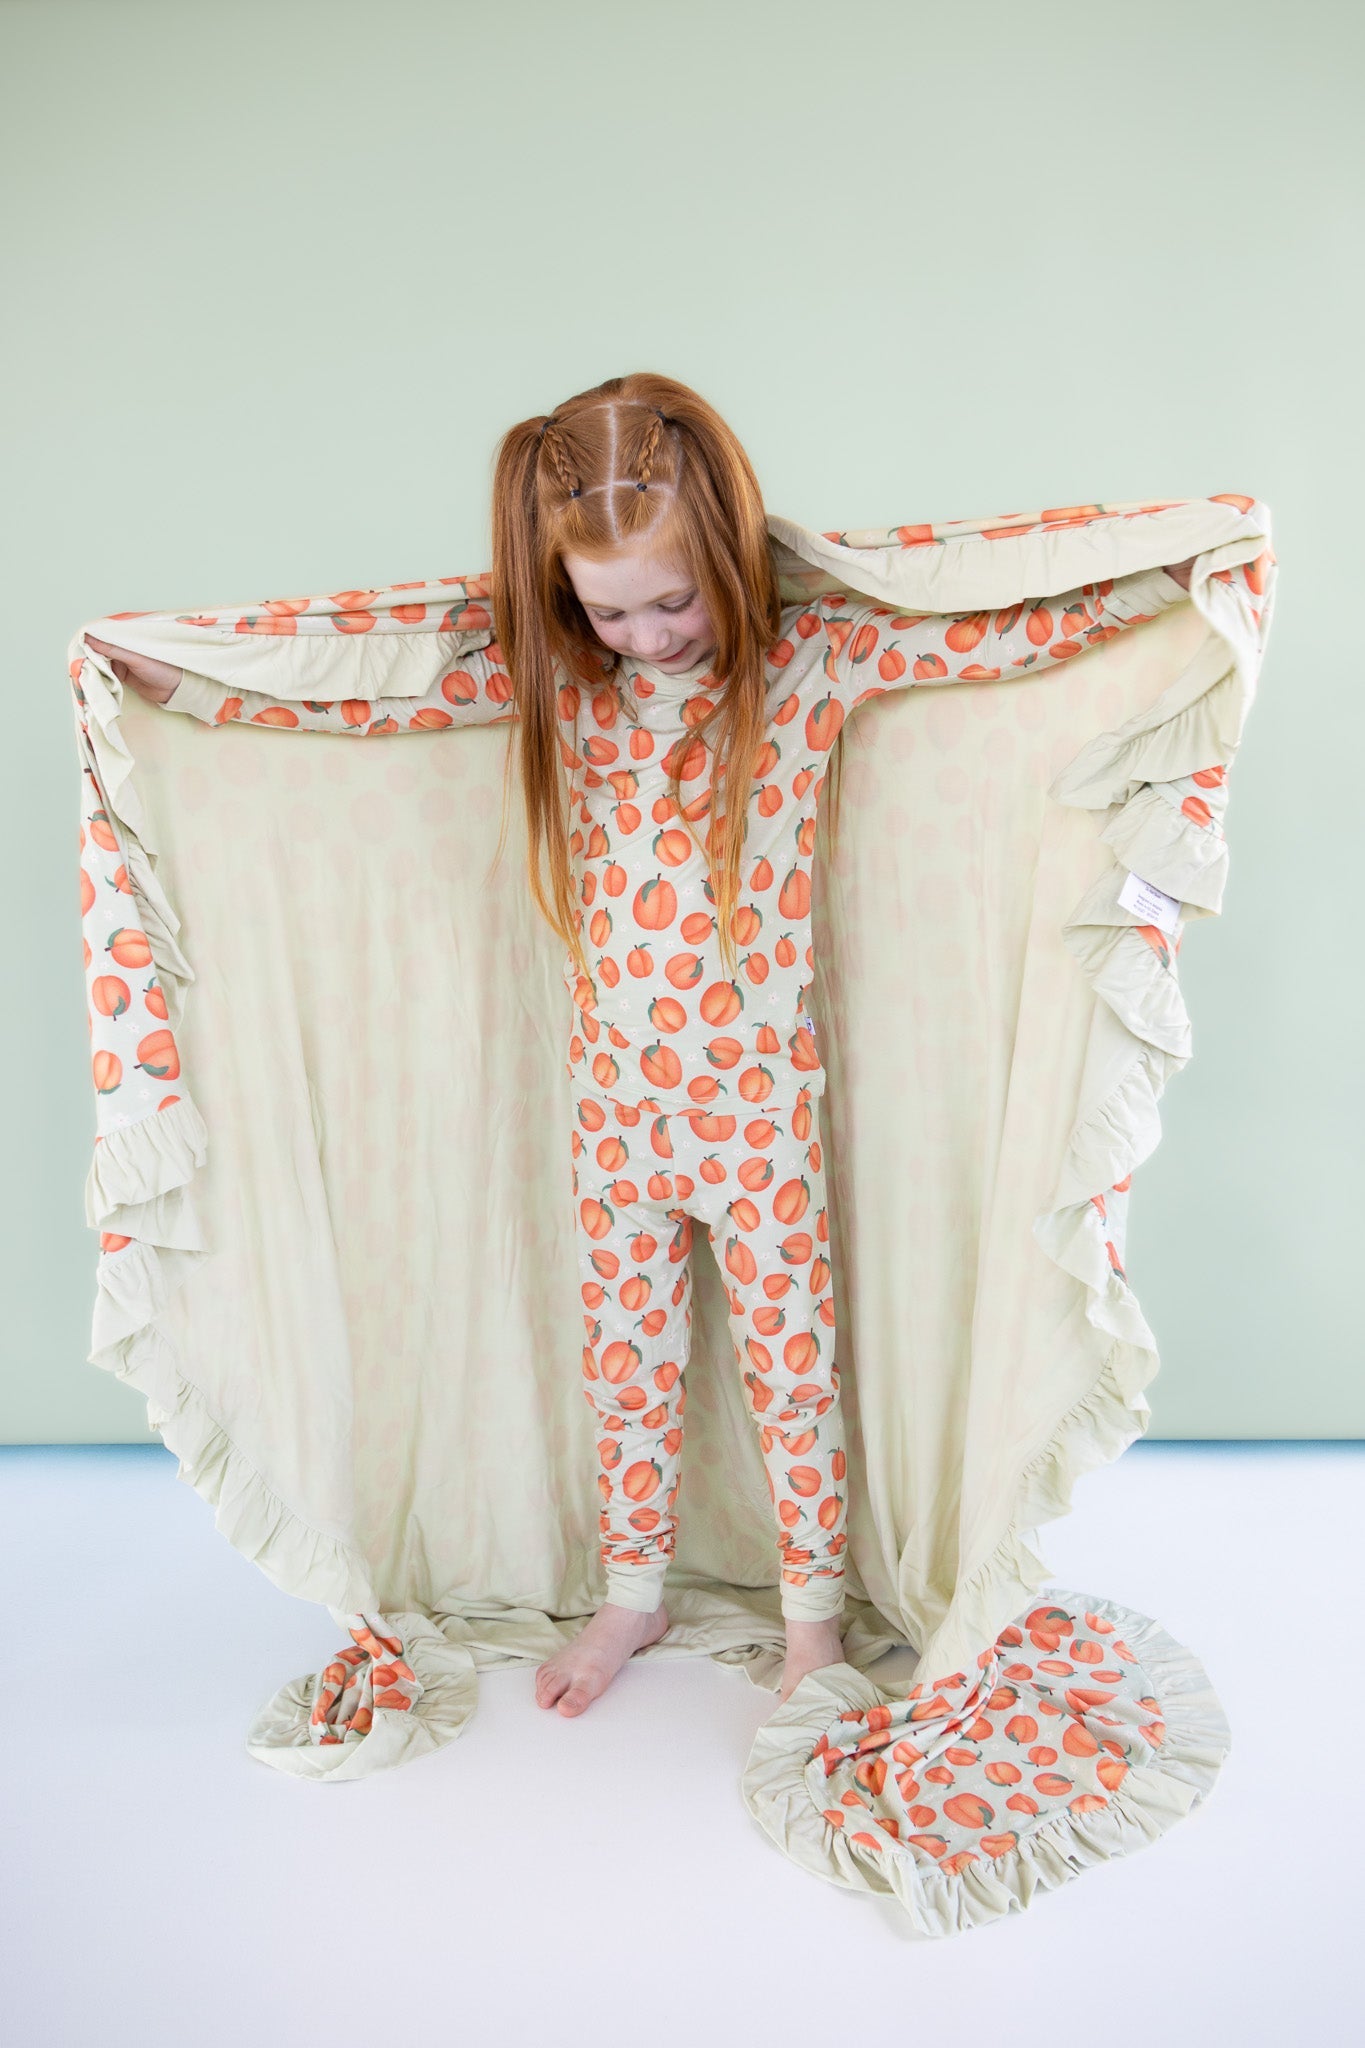 Peachy-keen Dream Blanket